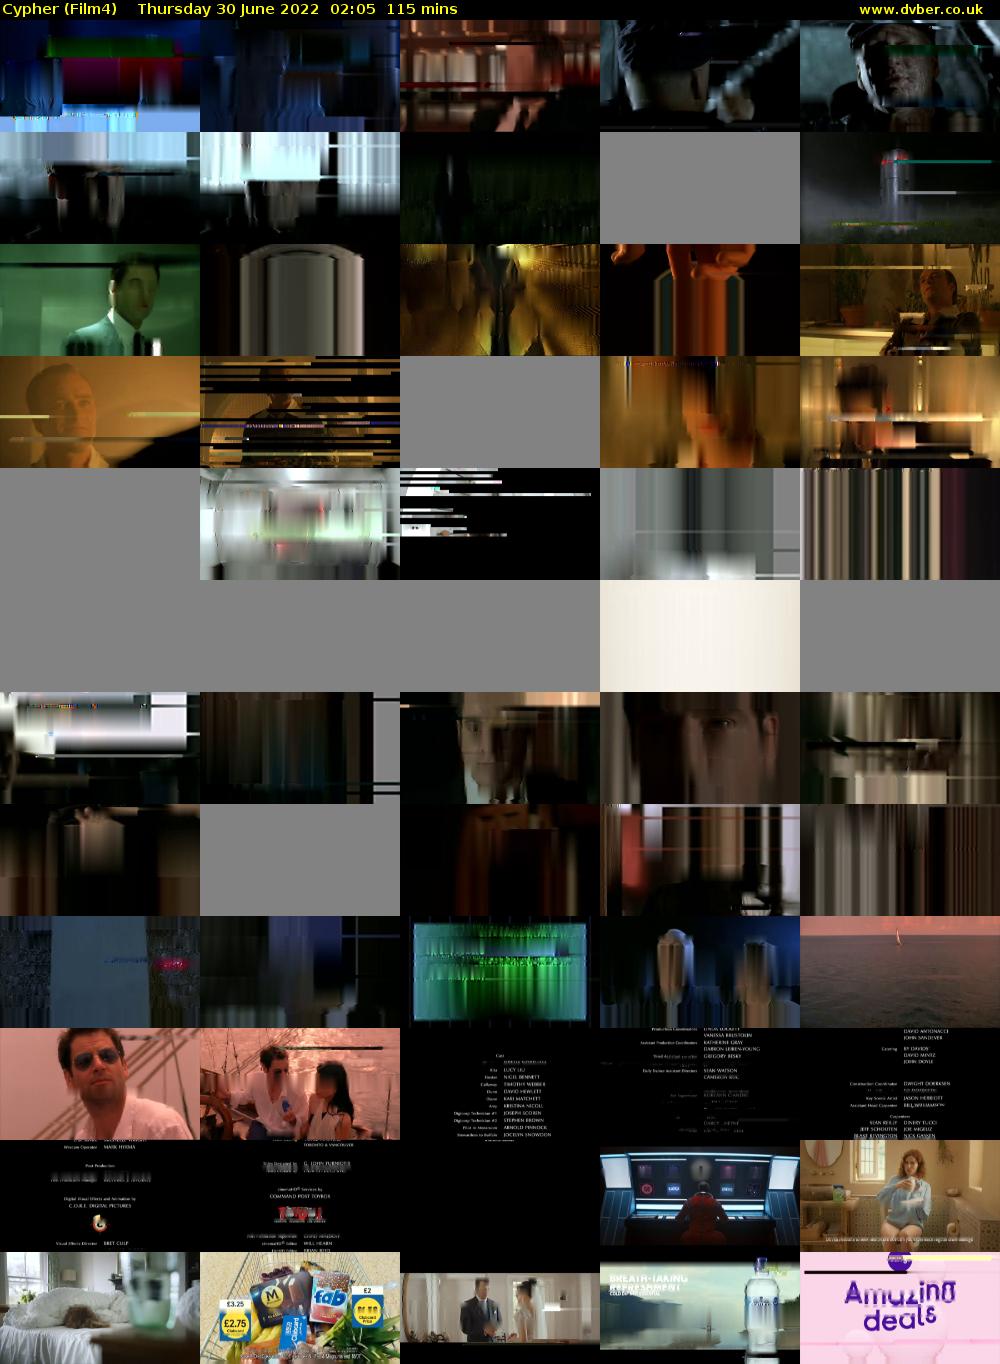 Cypher (Film4) Thursday 30 June 2022 02:05 - 04:00